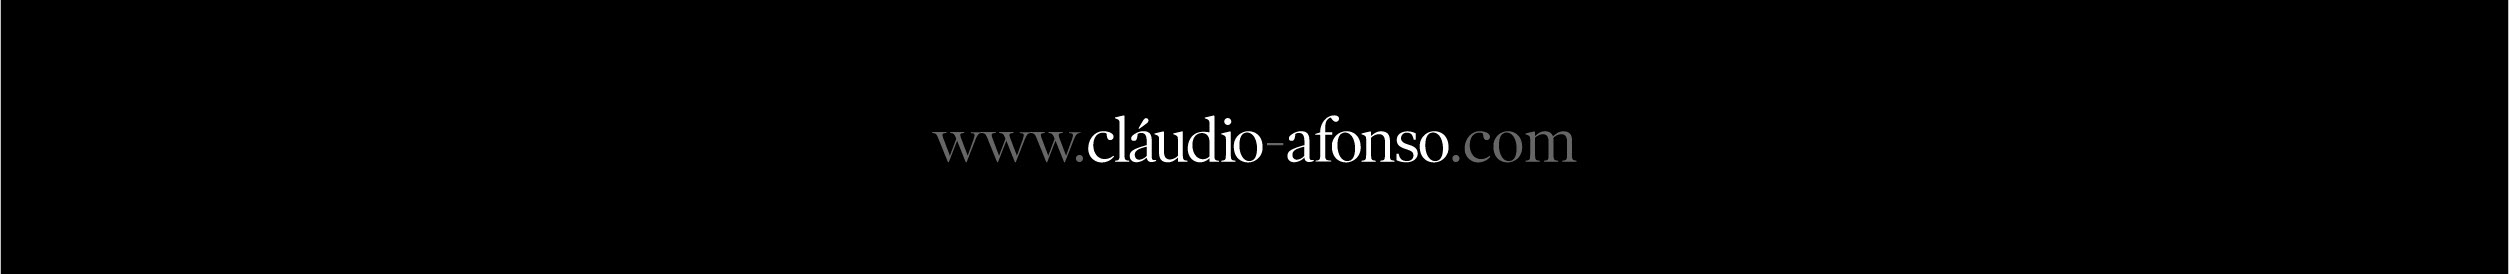 Cláudio Afonso's profile banner